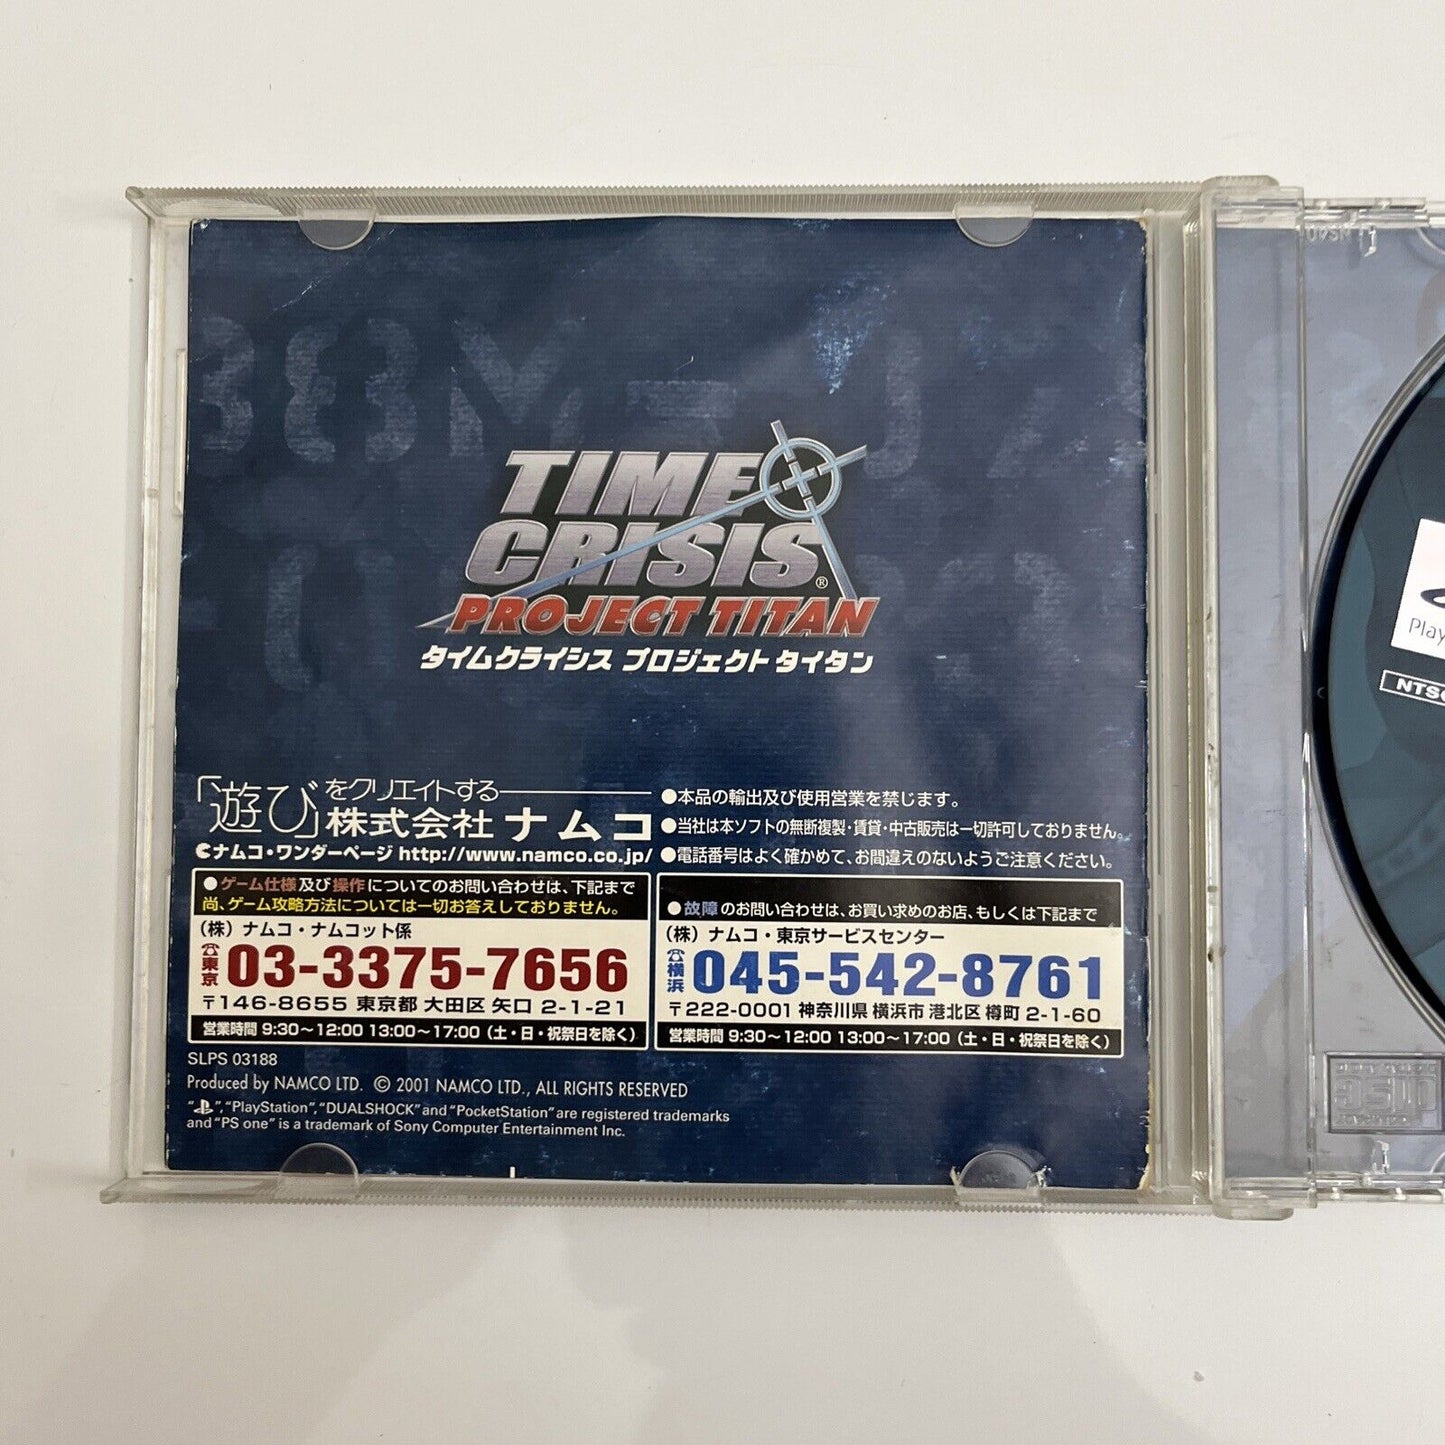 Time Crisis Project Titan - Sony PlayStation PS1 NTSC-J JAPAN Light Gun Game